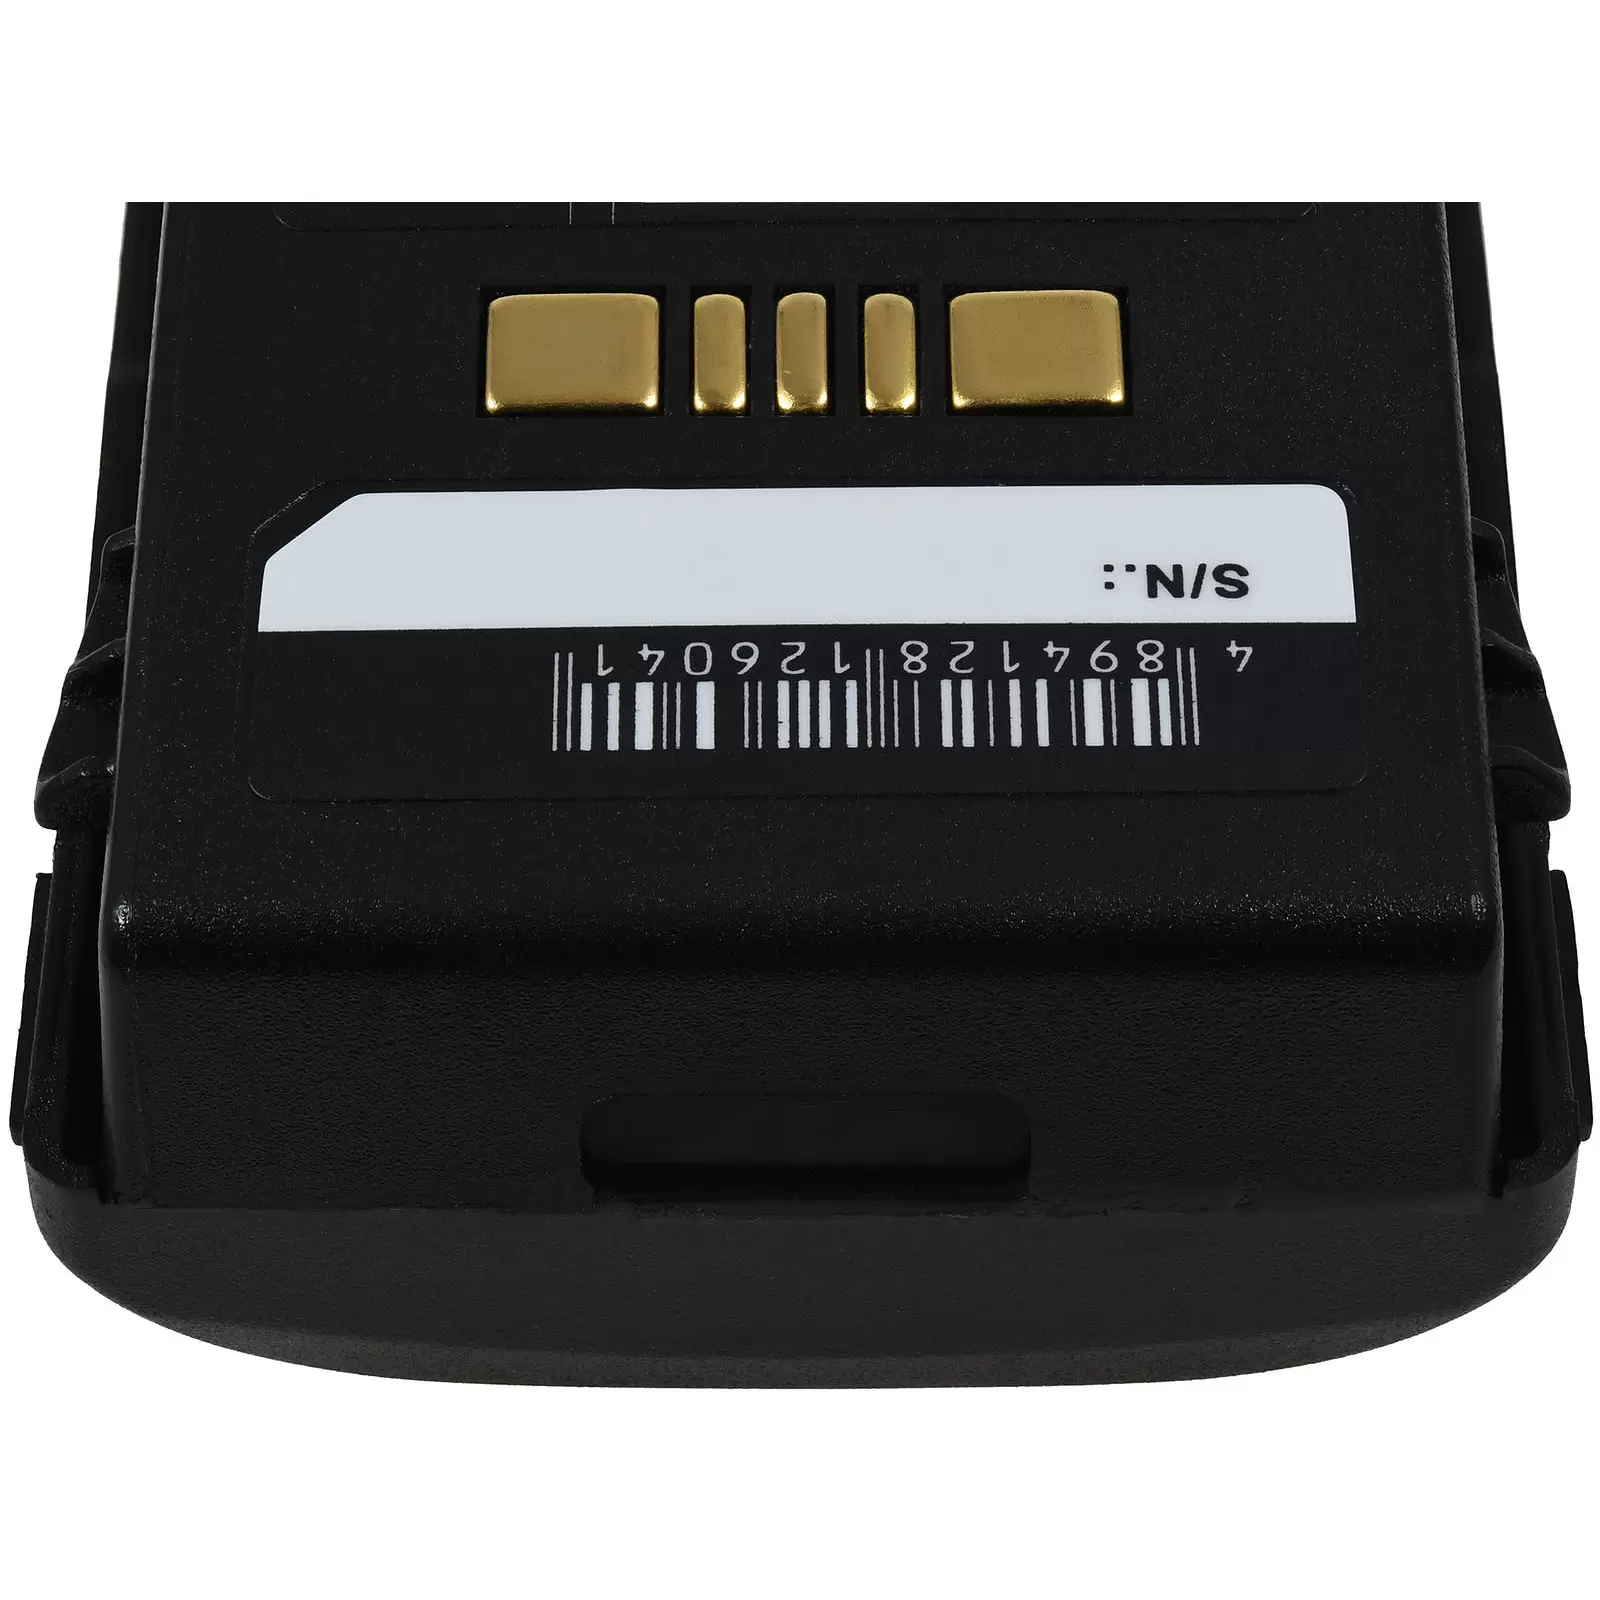 XXL-Akku passend für Barcode-Scanner Motorola Zebra MC3200, Zebra MC32N0, Typ BTRY-MC32-01-01